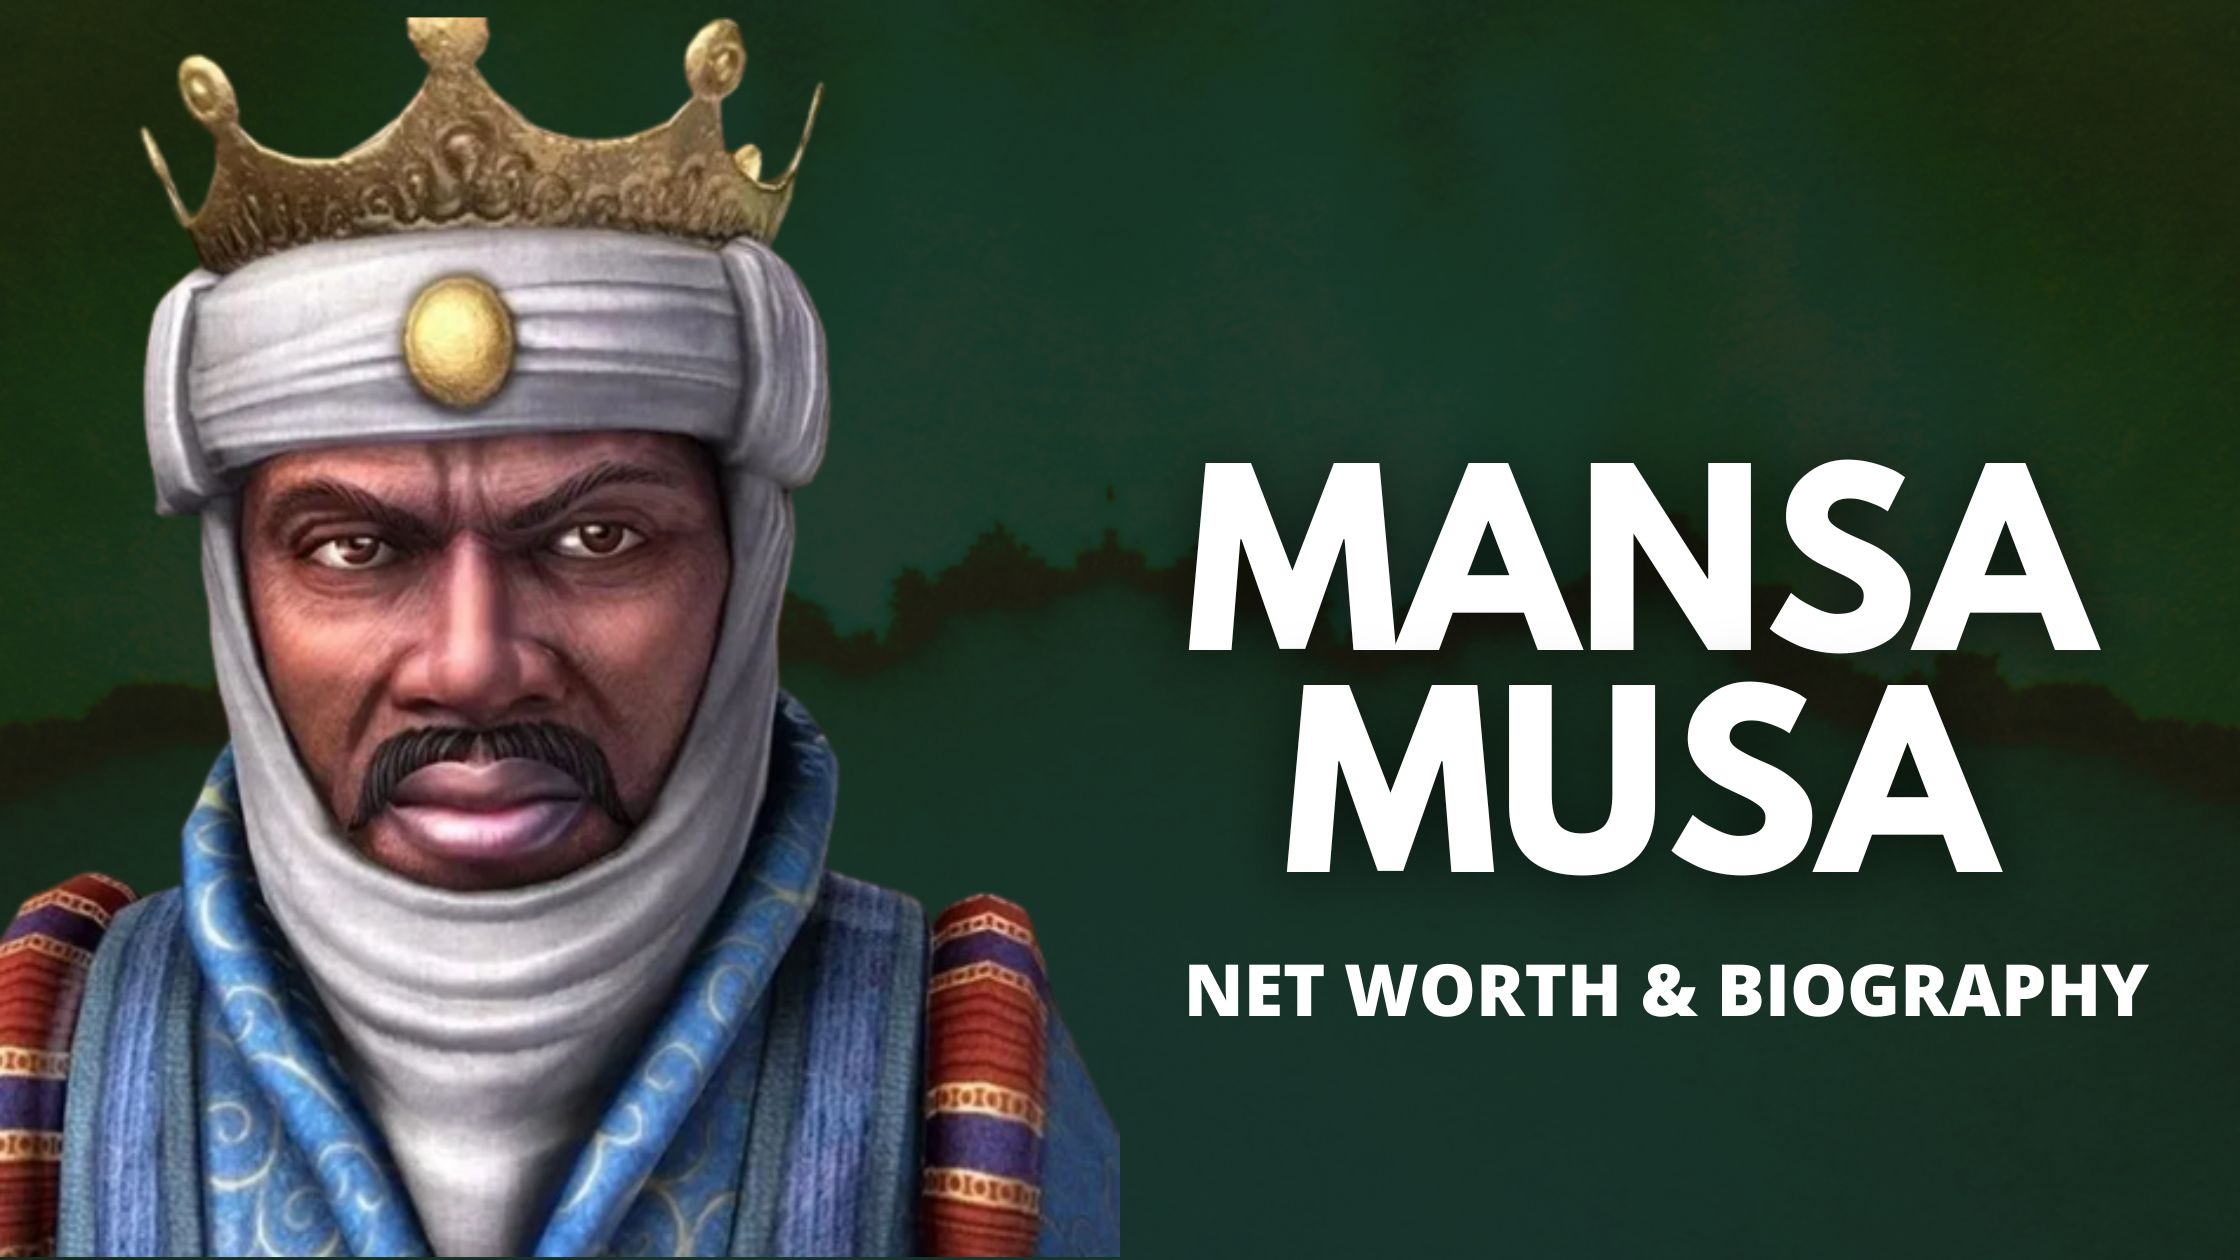 Mansa Musa - The Richest Man Ever